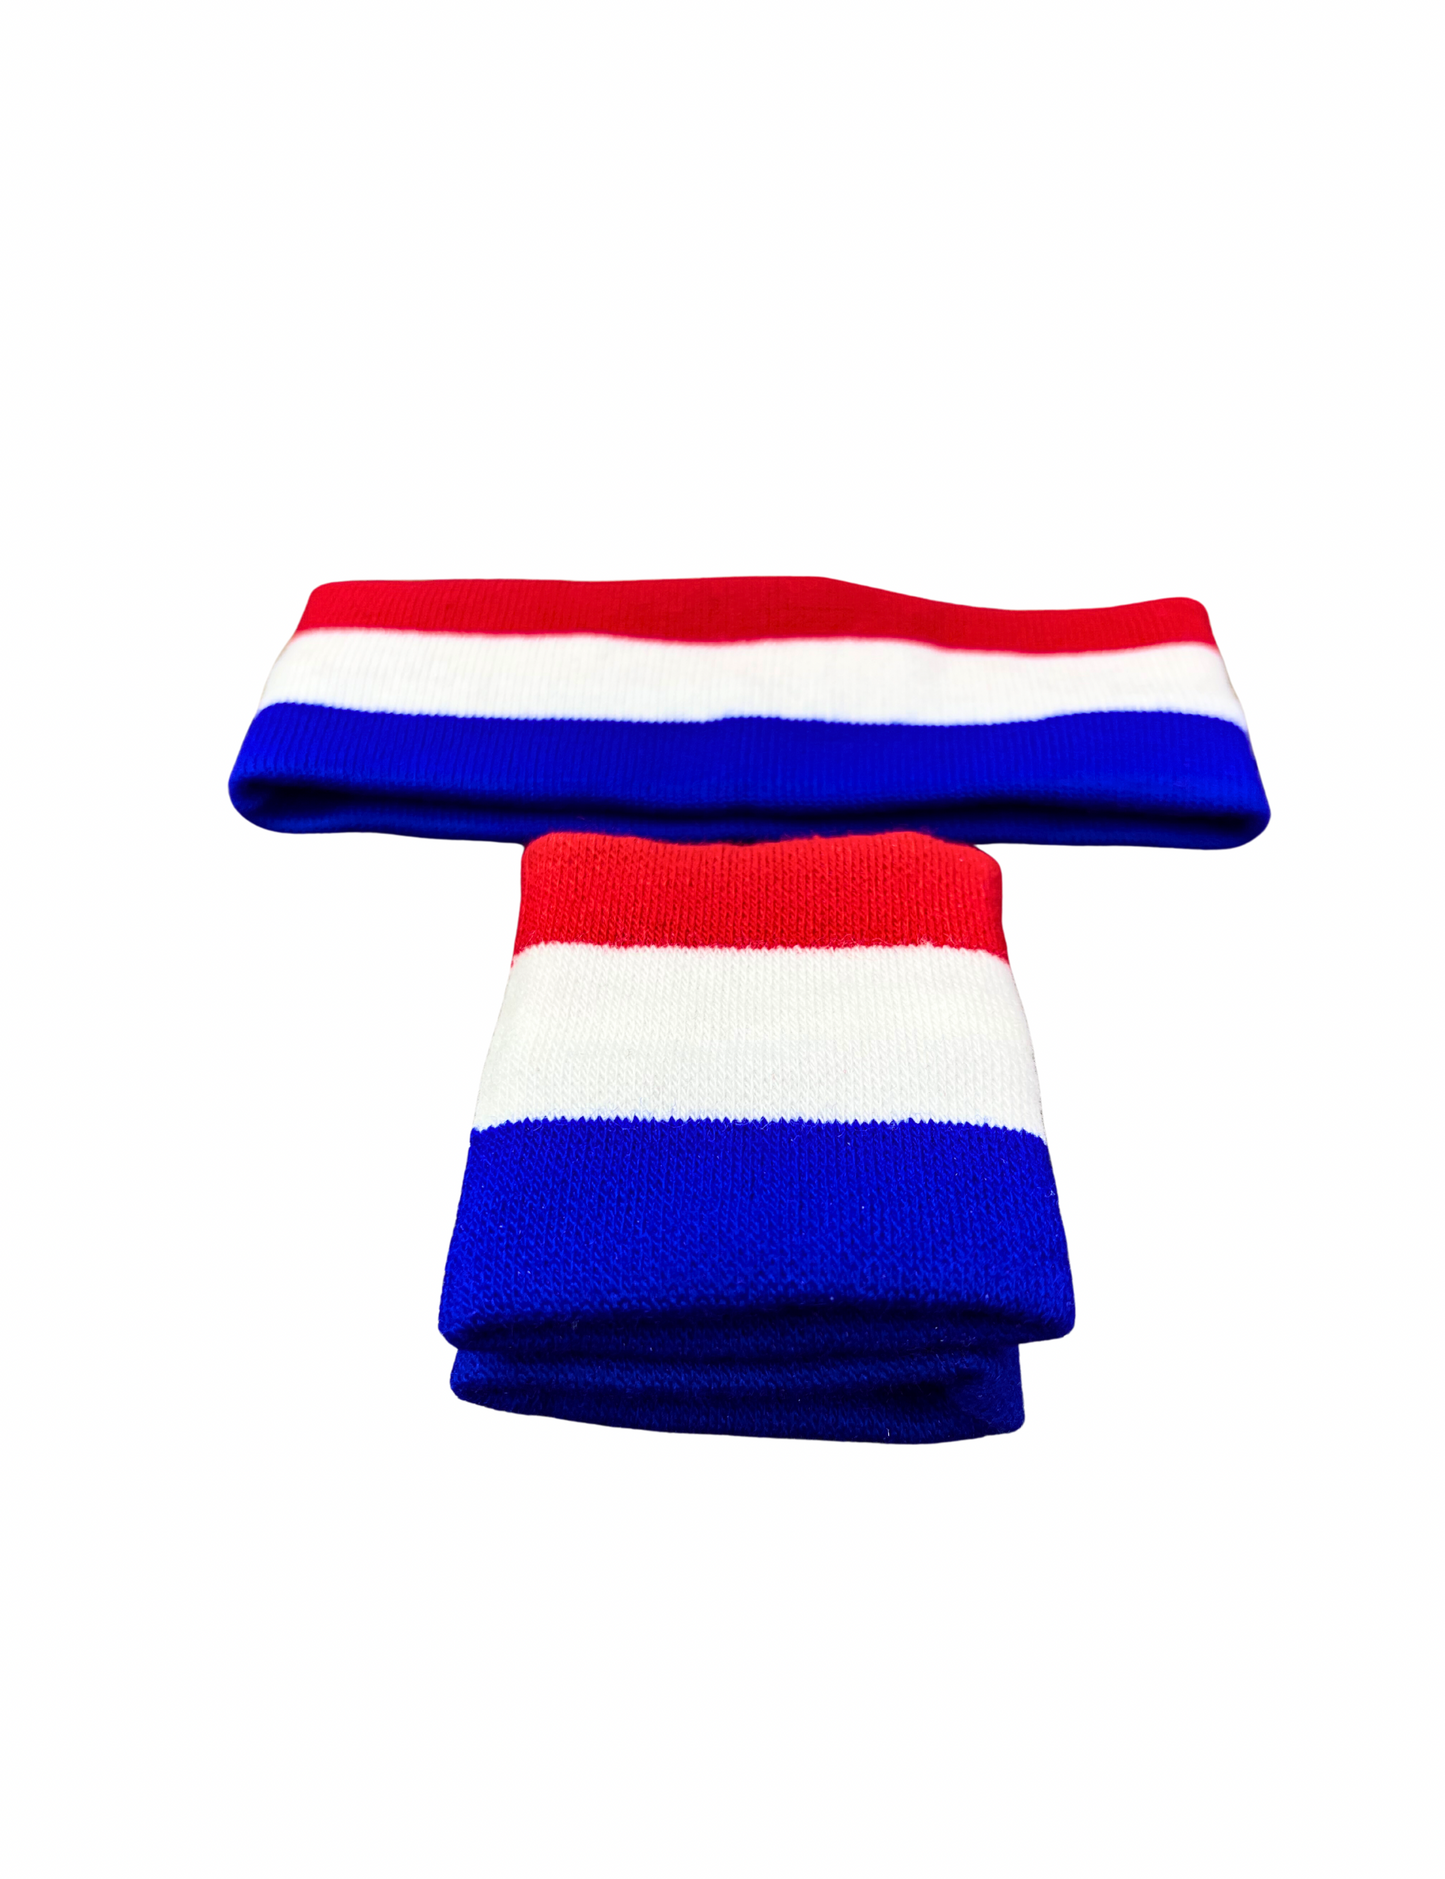 80’s Red/White/Blue Striped Set of Sweatbands Headband & Wristband